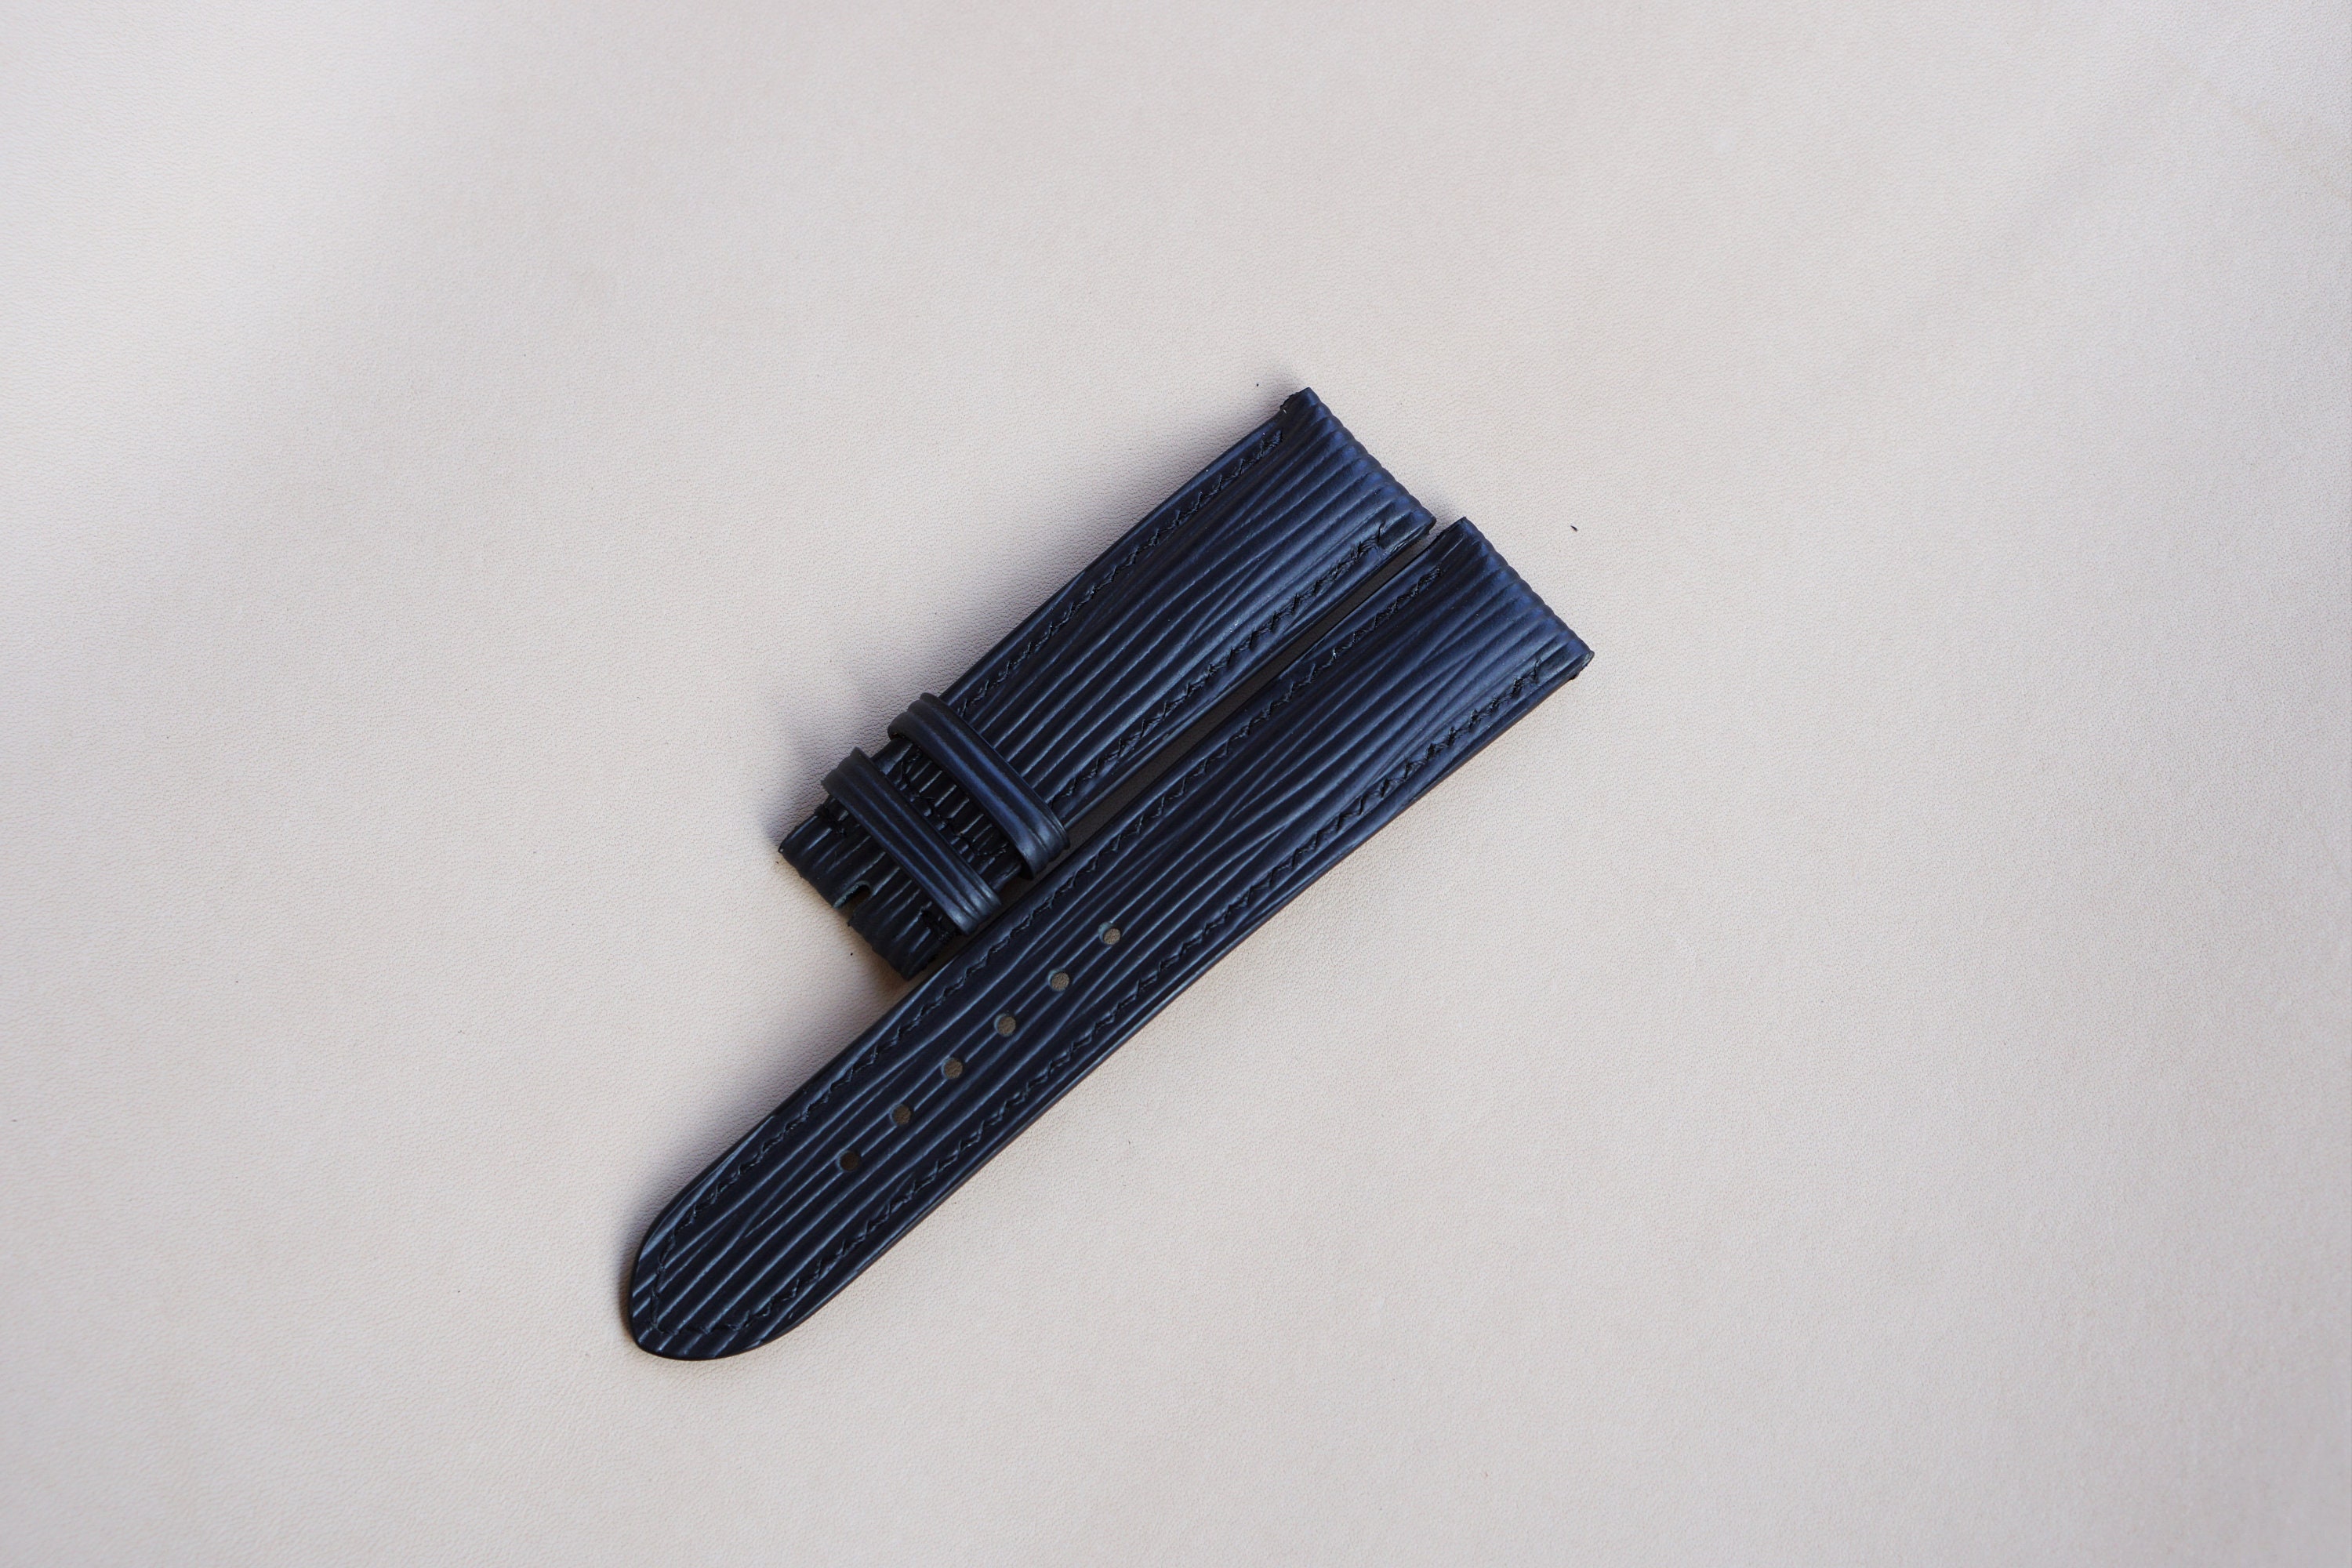 Handmade Epi Leather Watch Strap Black Calf Leather Watch 